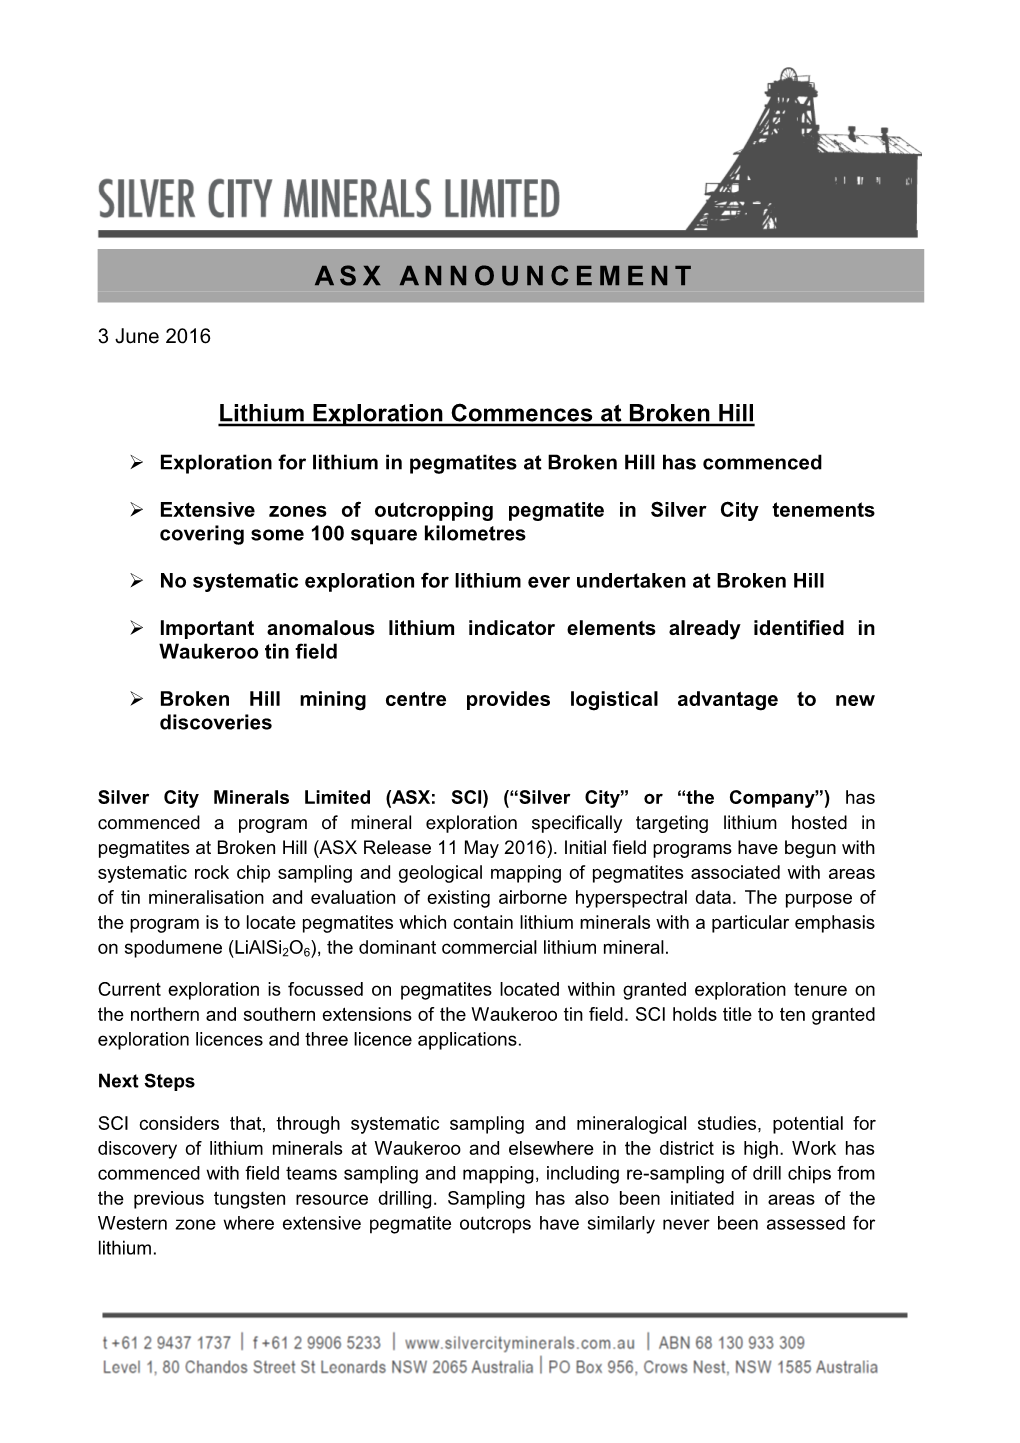 Lithium Exploration Commences at Broken Hill